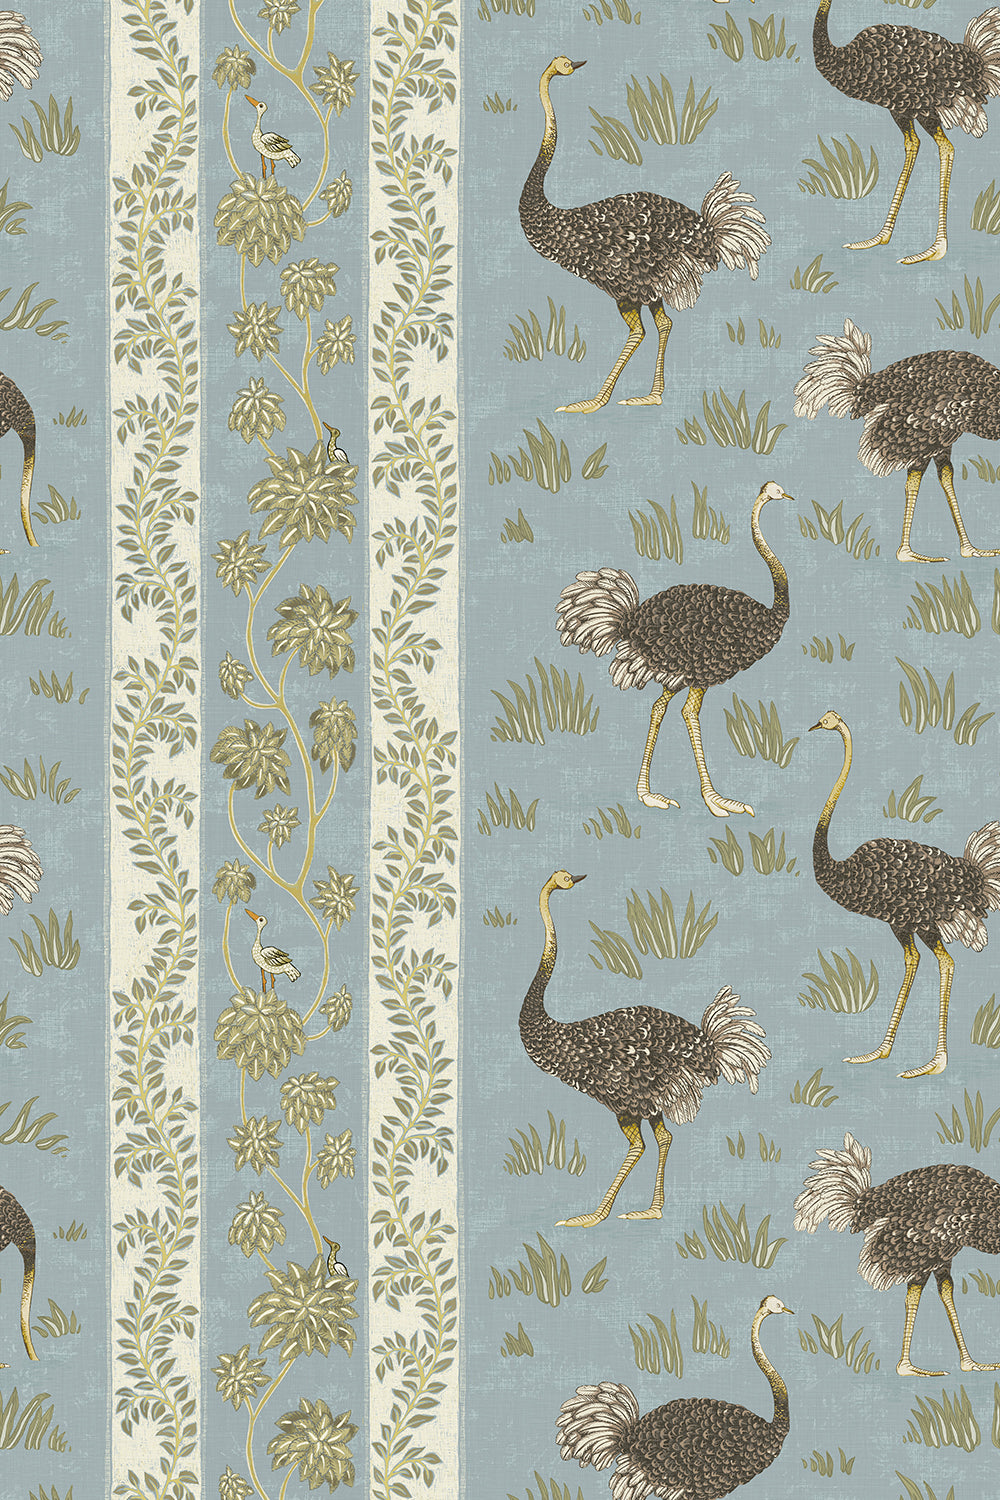 Josephine-Munsey-wallpaper-Ostrich-stripe-wallpaper-birds-amongst-grass-stripe-background-cream-and-green